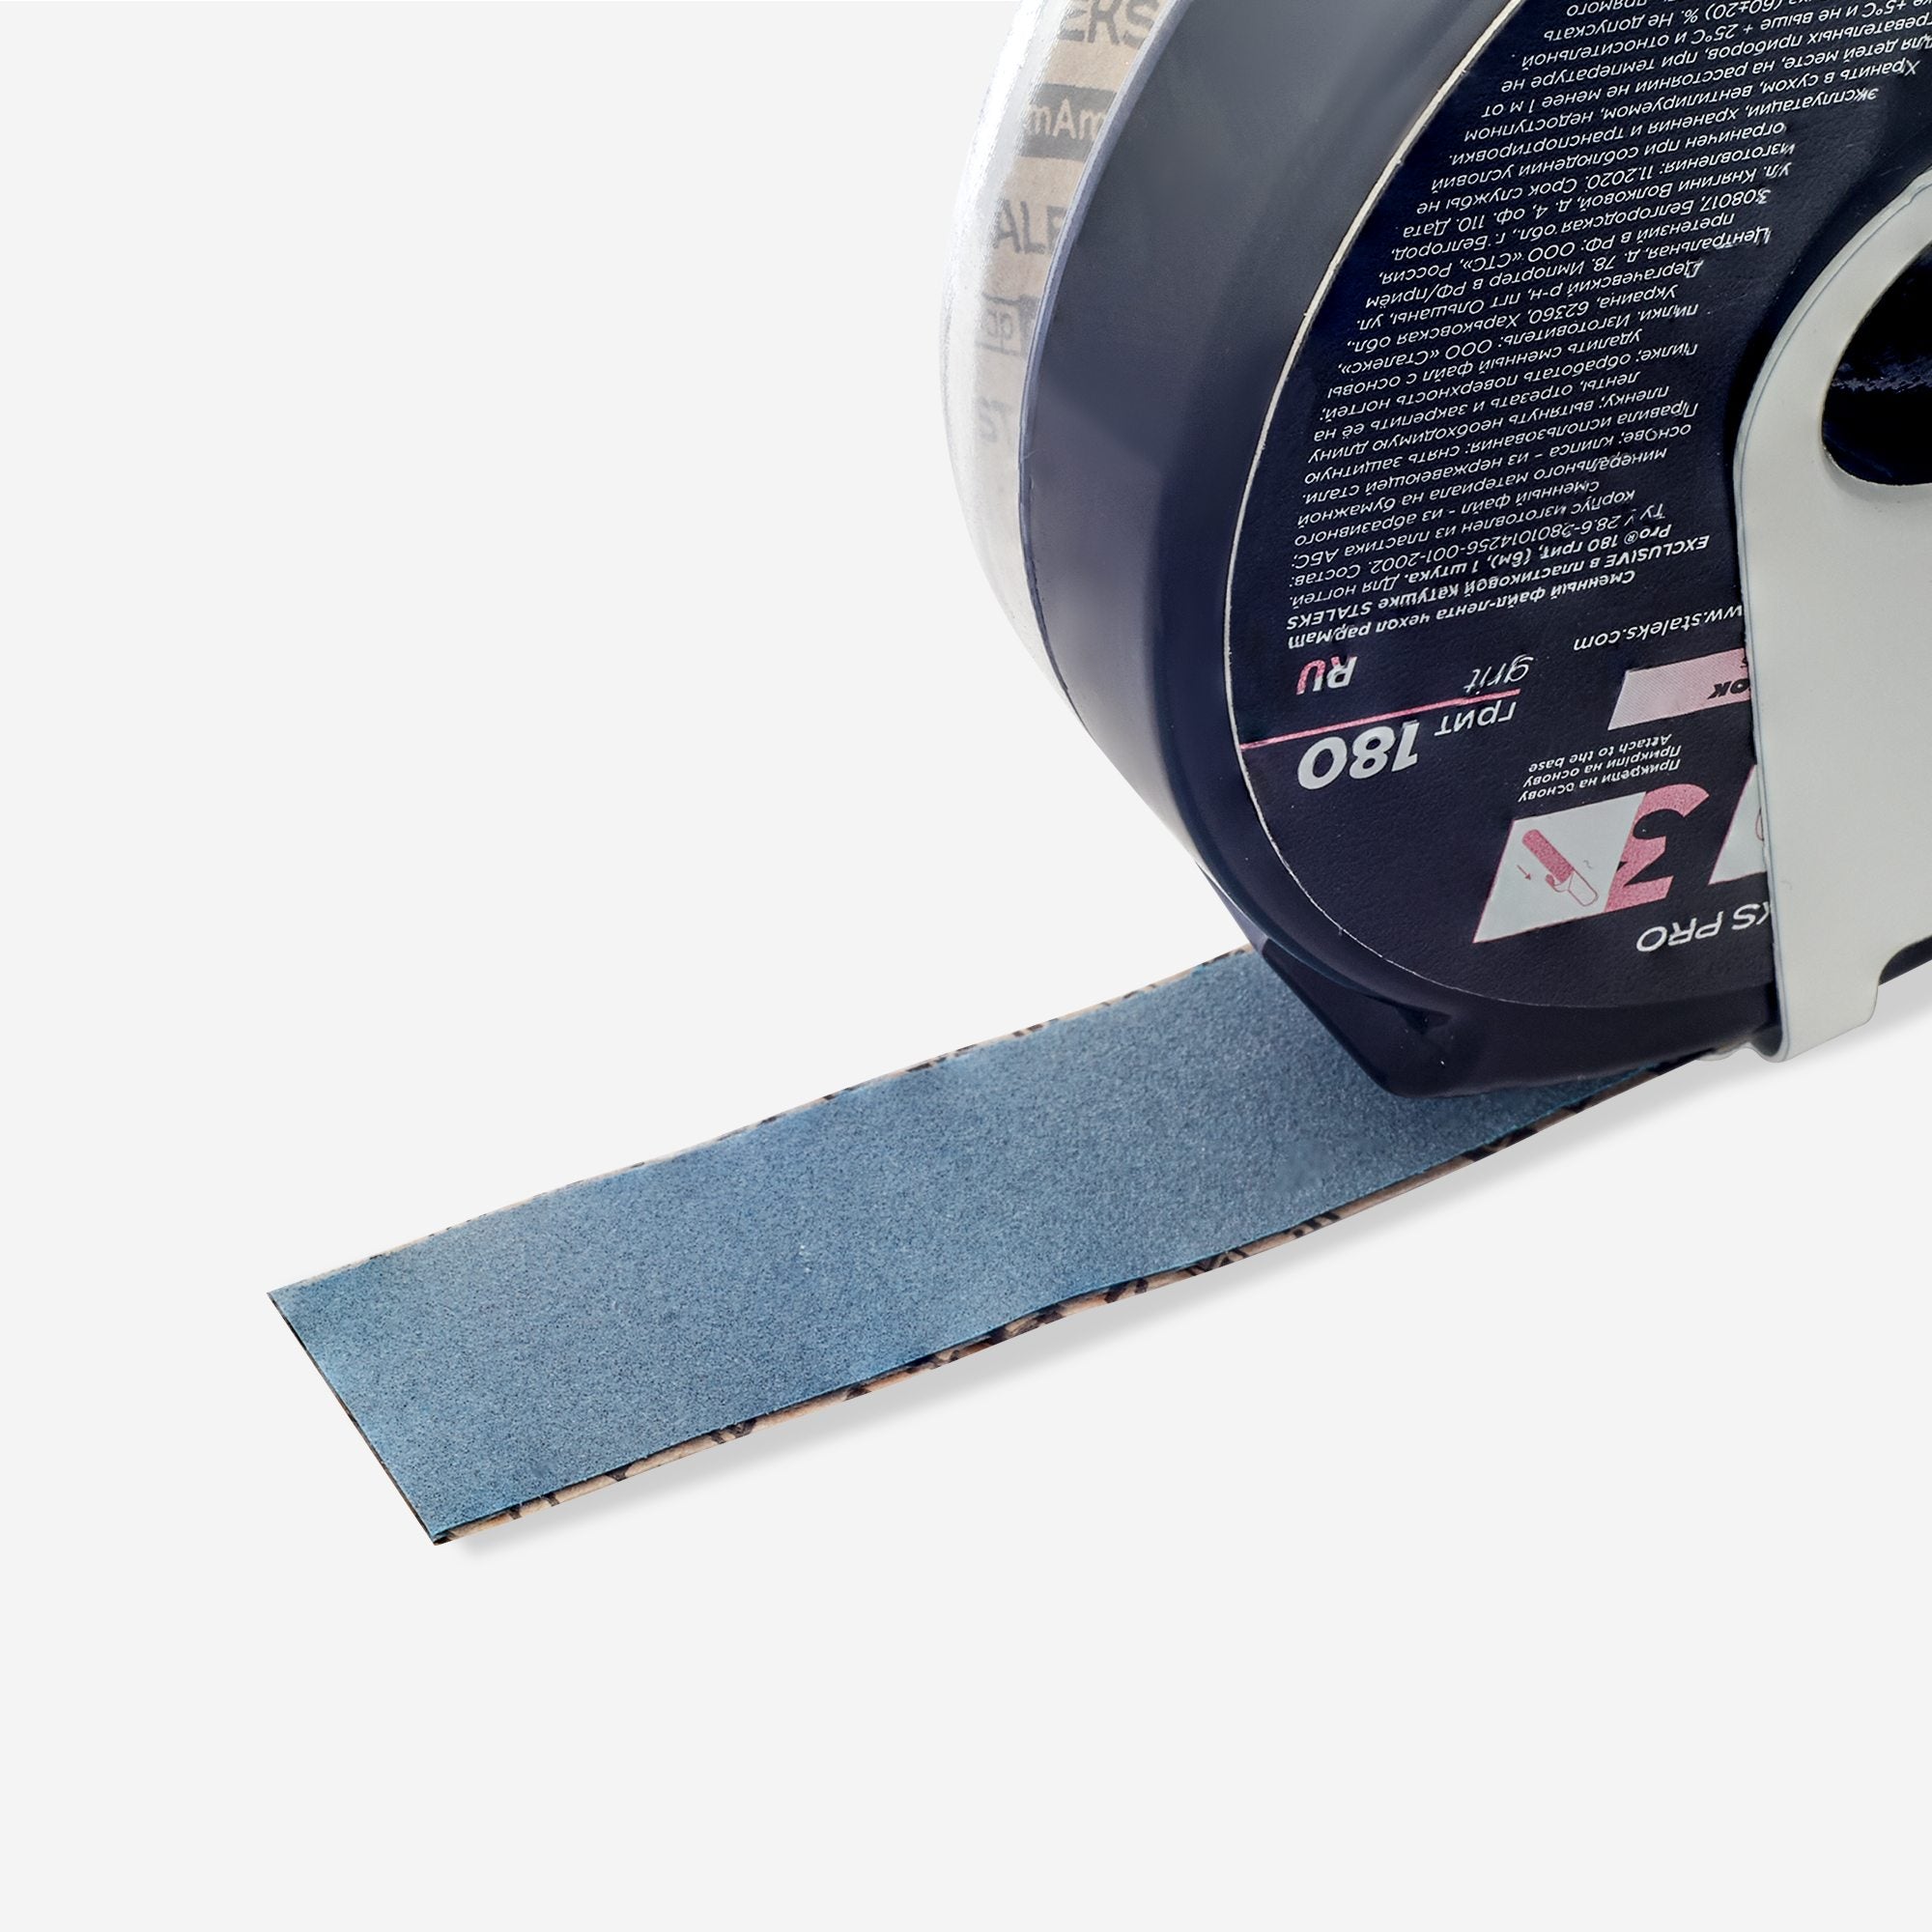 Disposable abrasive tape papmAm EXCLUSIVE  in a plastic case